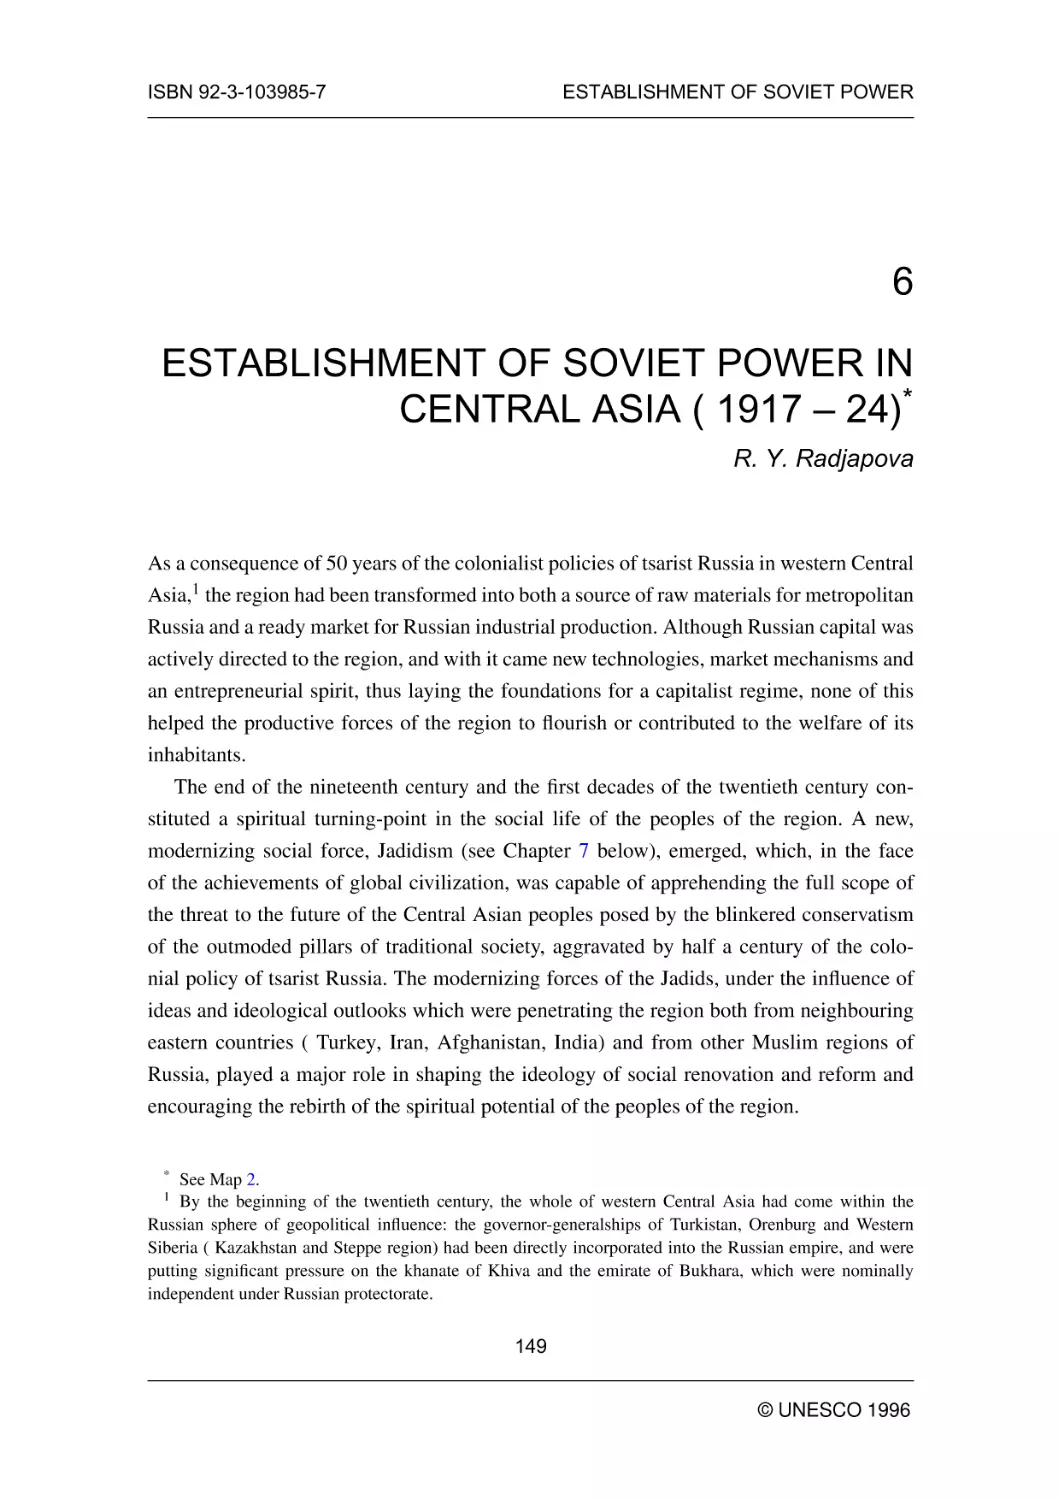 ESTABLISHMENT OF SOVIET POWER IN CENTRAL ASIA ( 1917 -- 24)